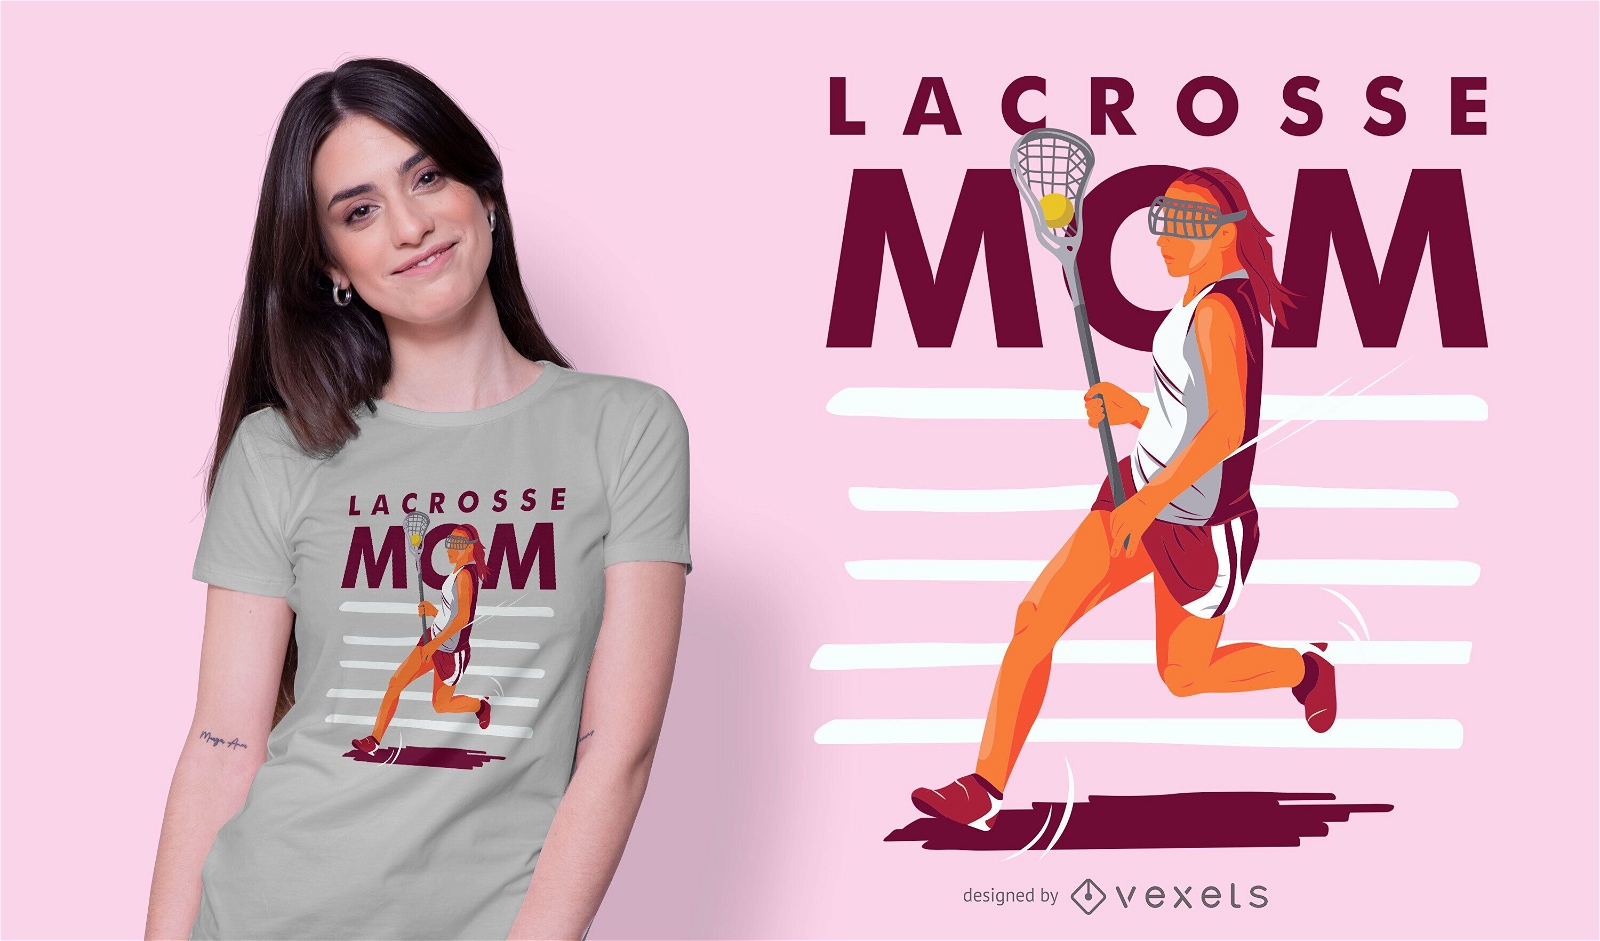 Lacrosse mom t-shirt design